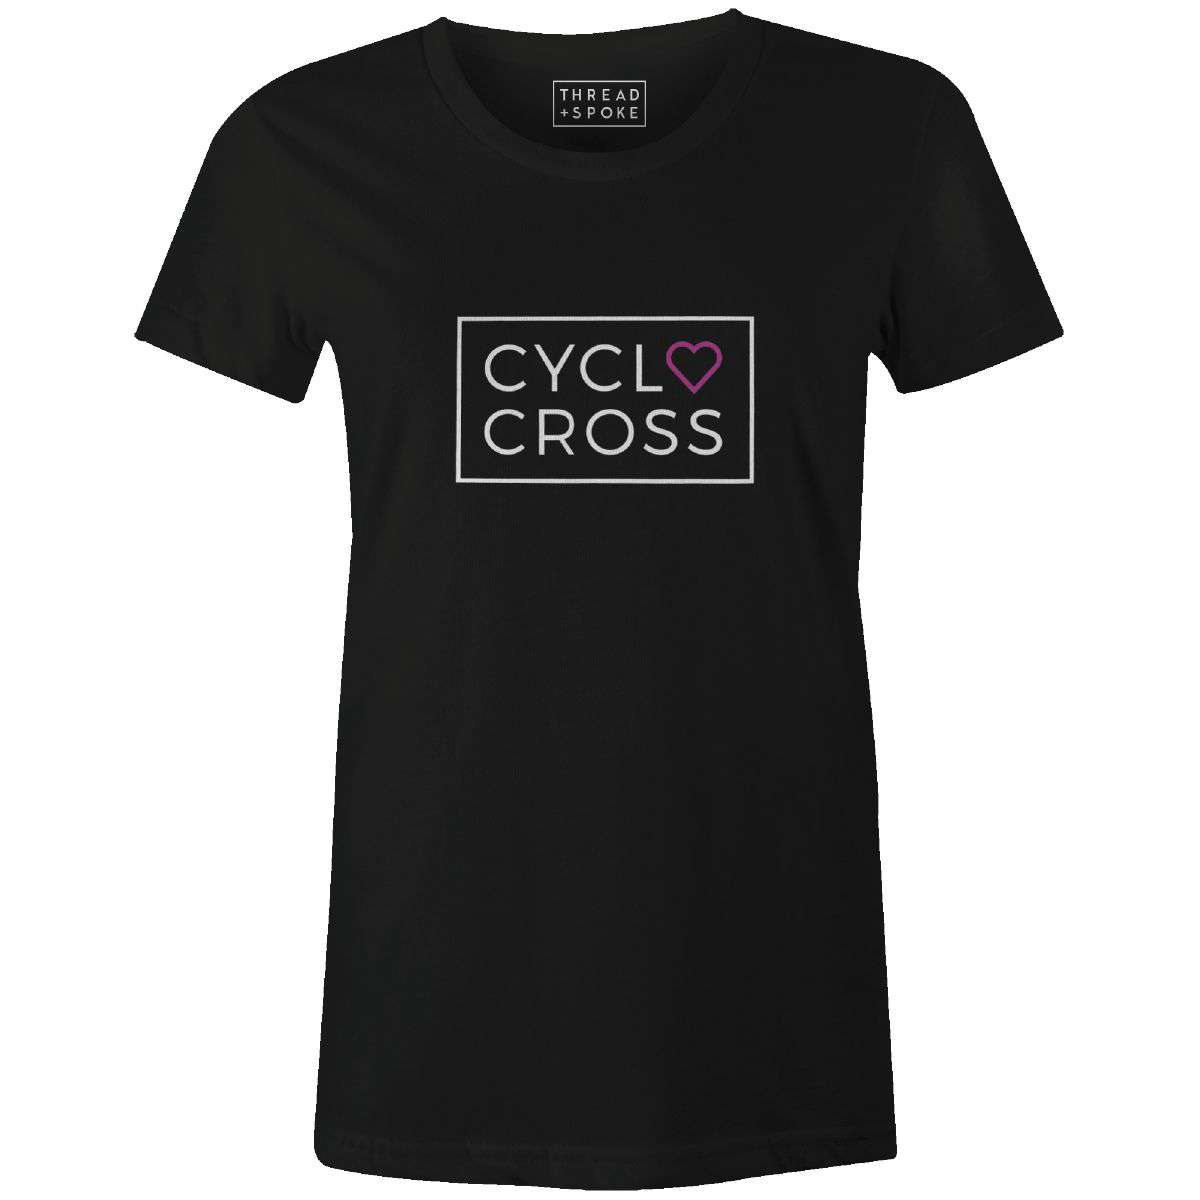 I Love Cyclocross Women'sThread+Spoke - THREAD+SPOKE | MTB APPAREL | ROAD BIKING T-SHIRTS | BICYCLE T SHIRTS |